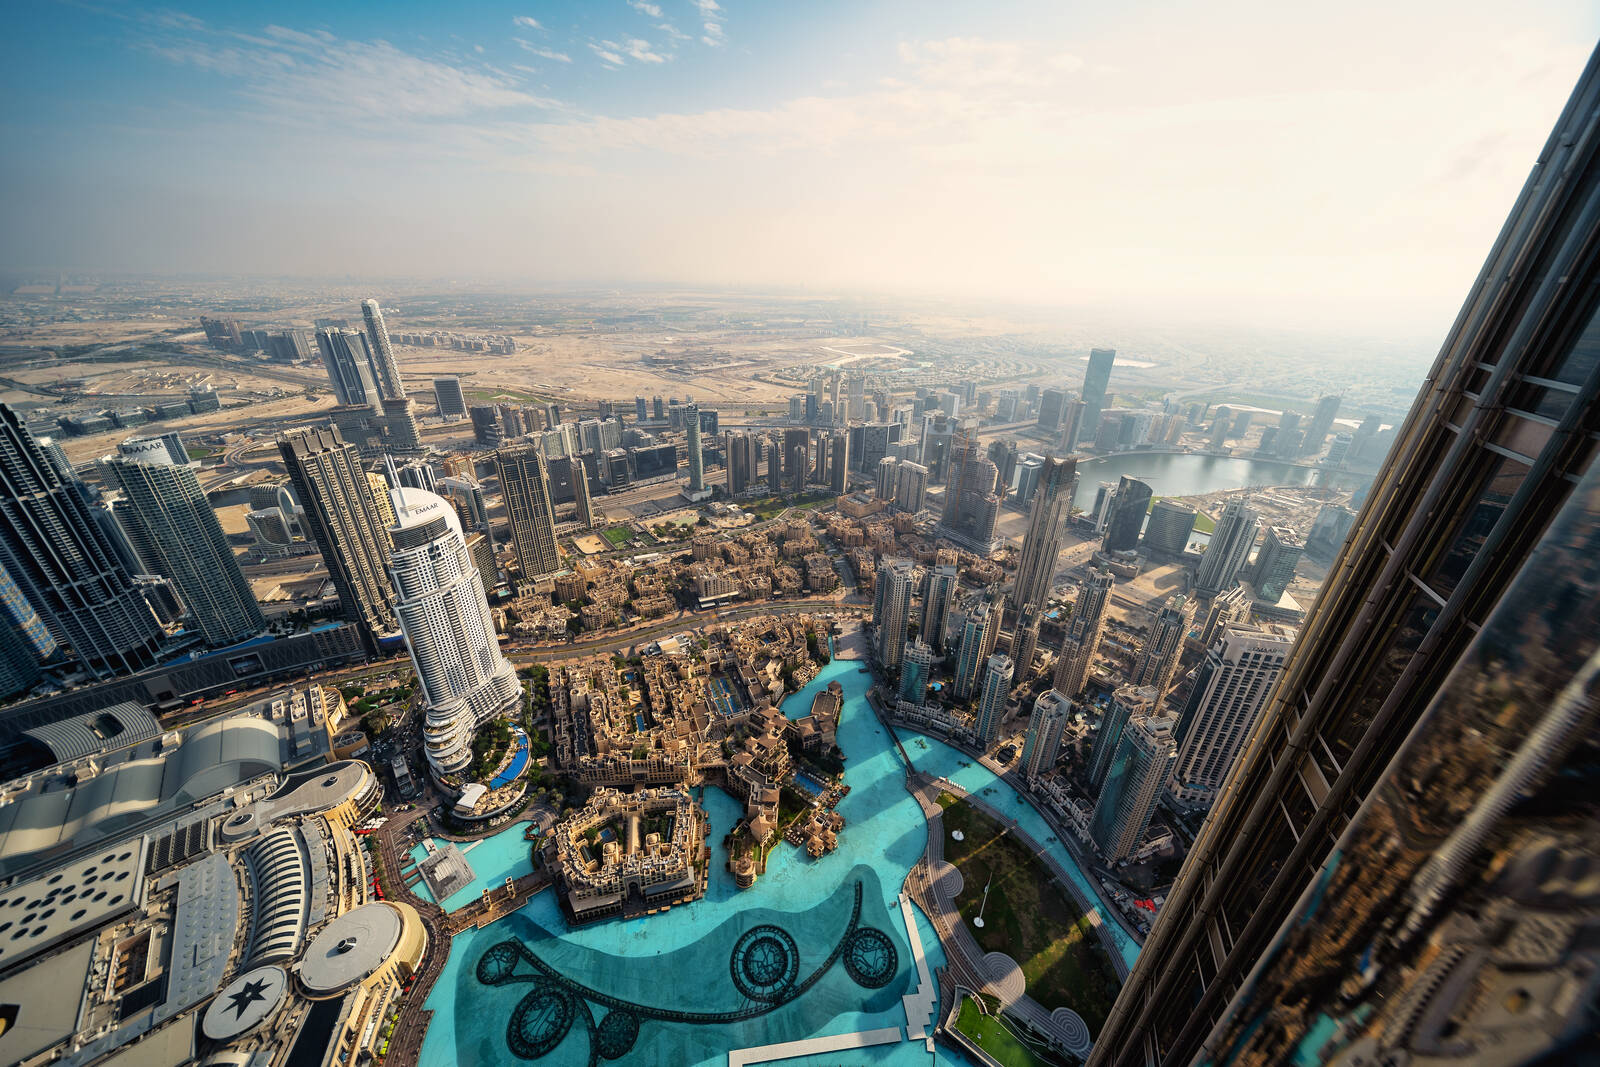 Image of Burj Khalifa Observation Deck by Mathew Browne